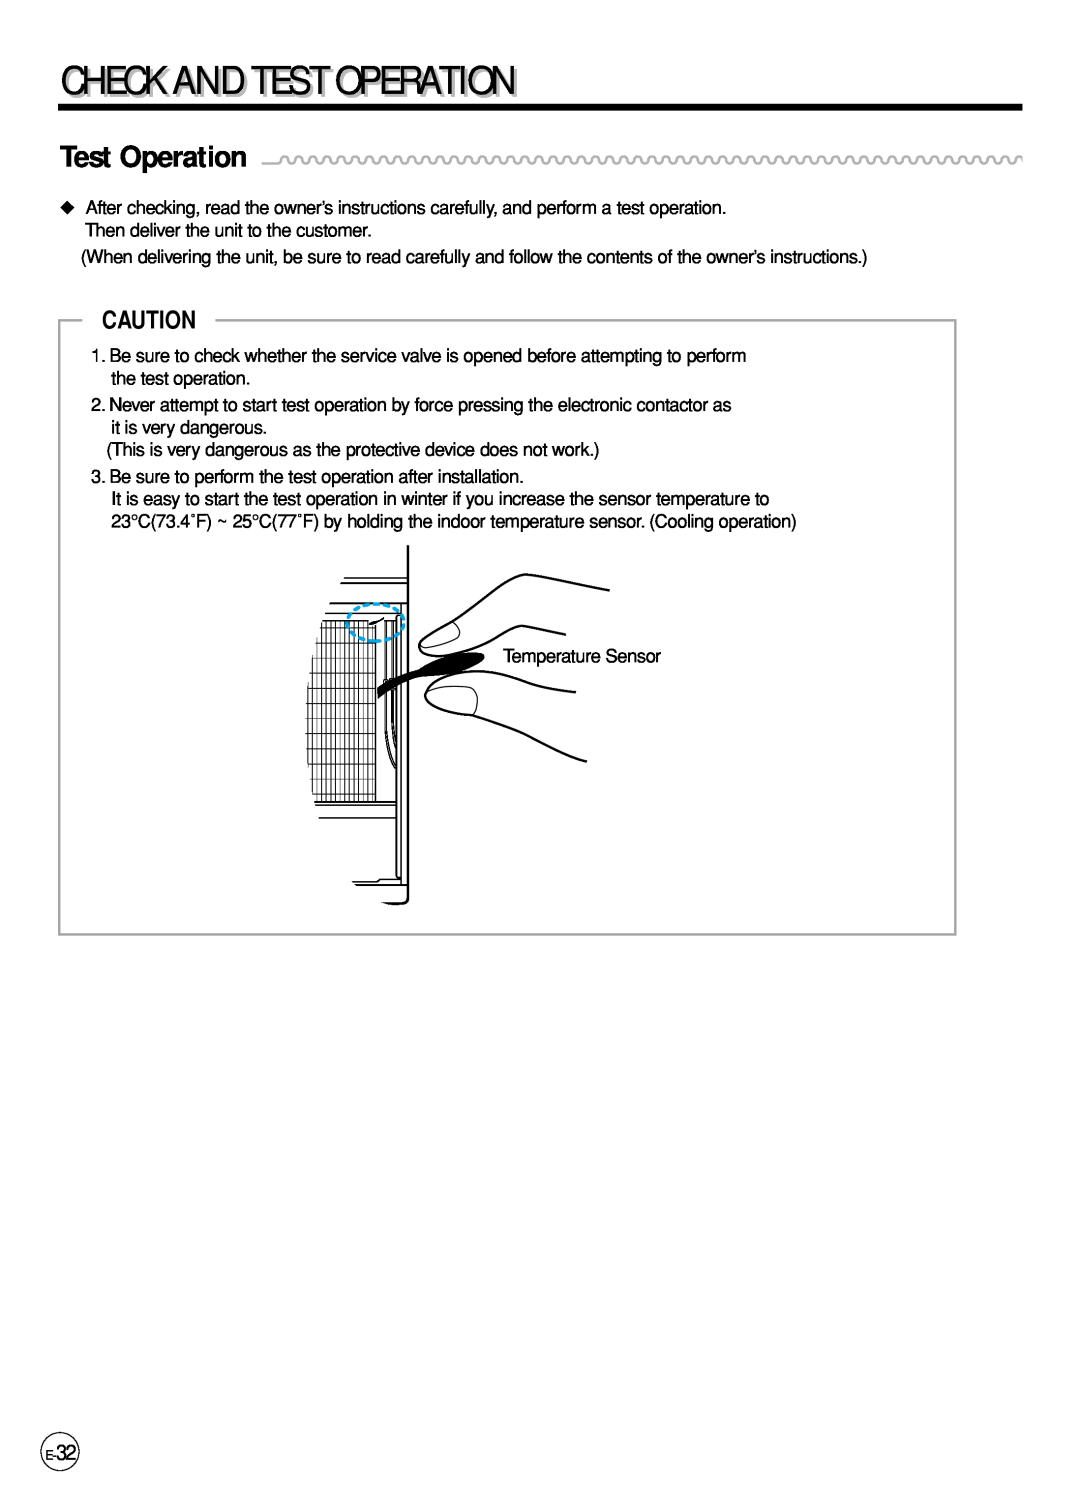 Samsung AP500PF installation manual Check And Test Operationi 